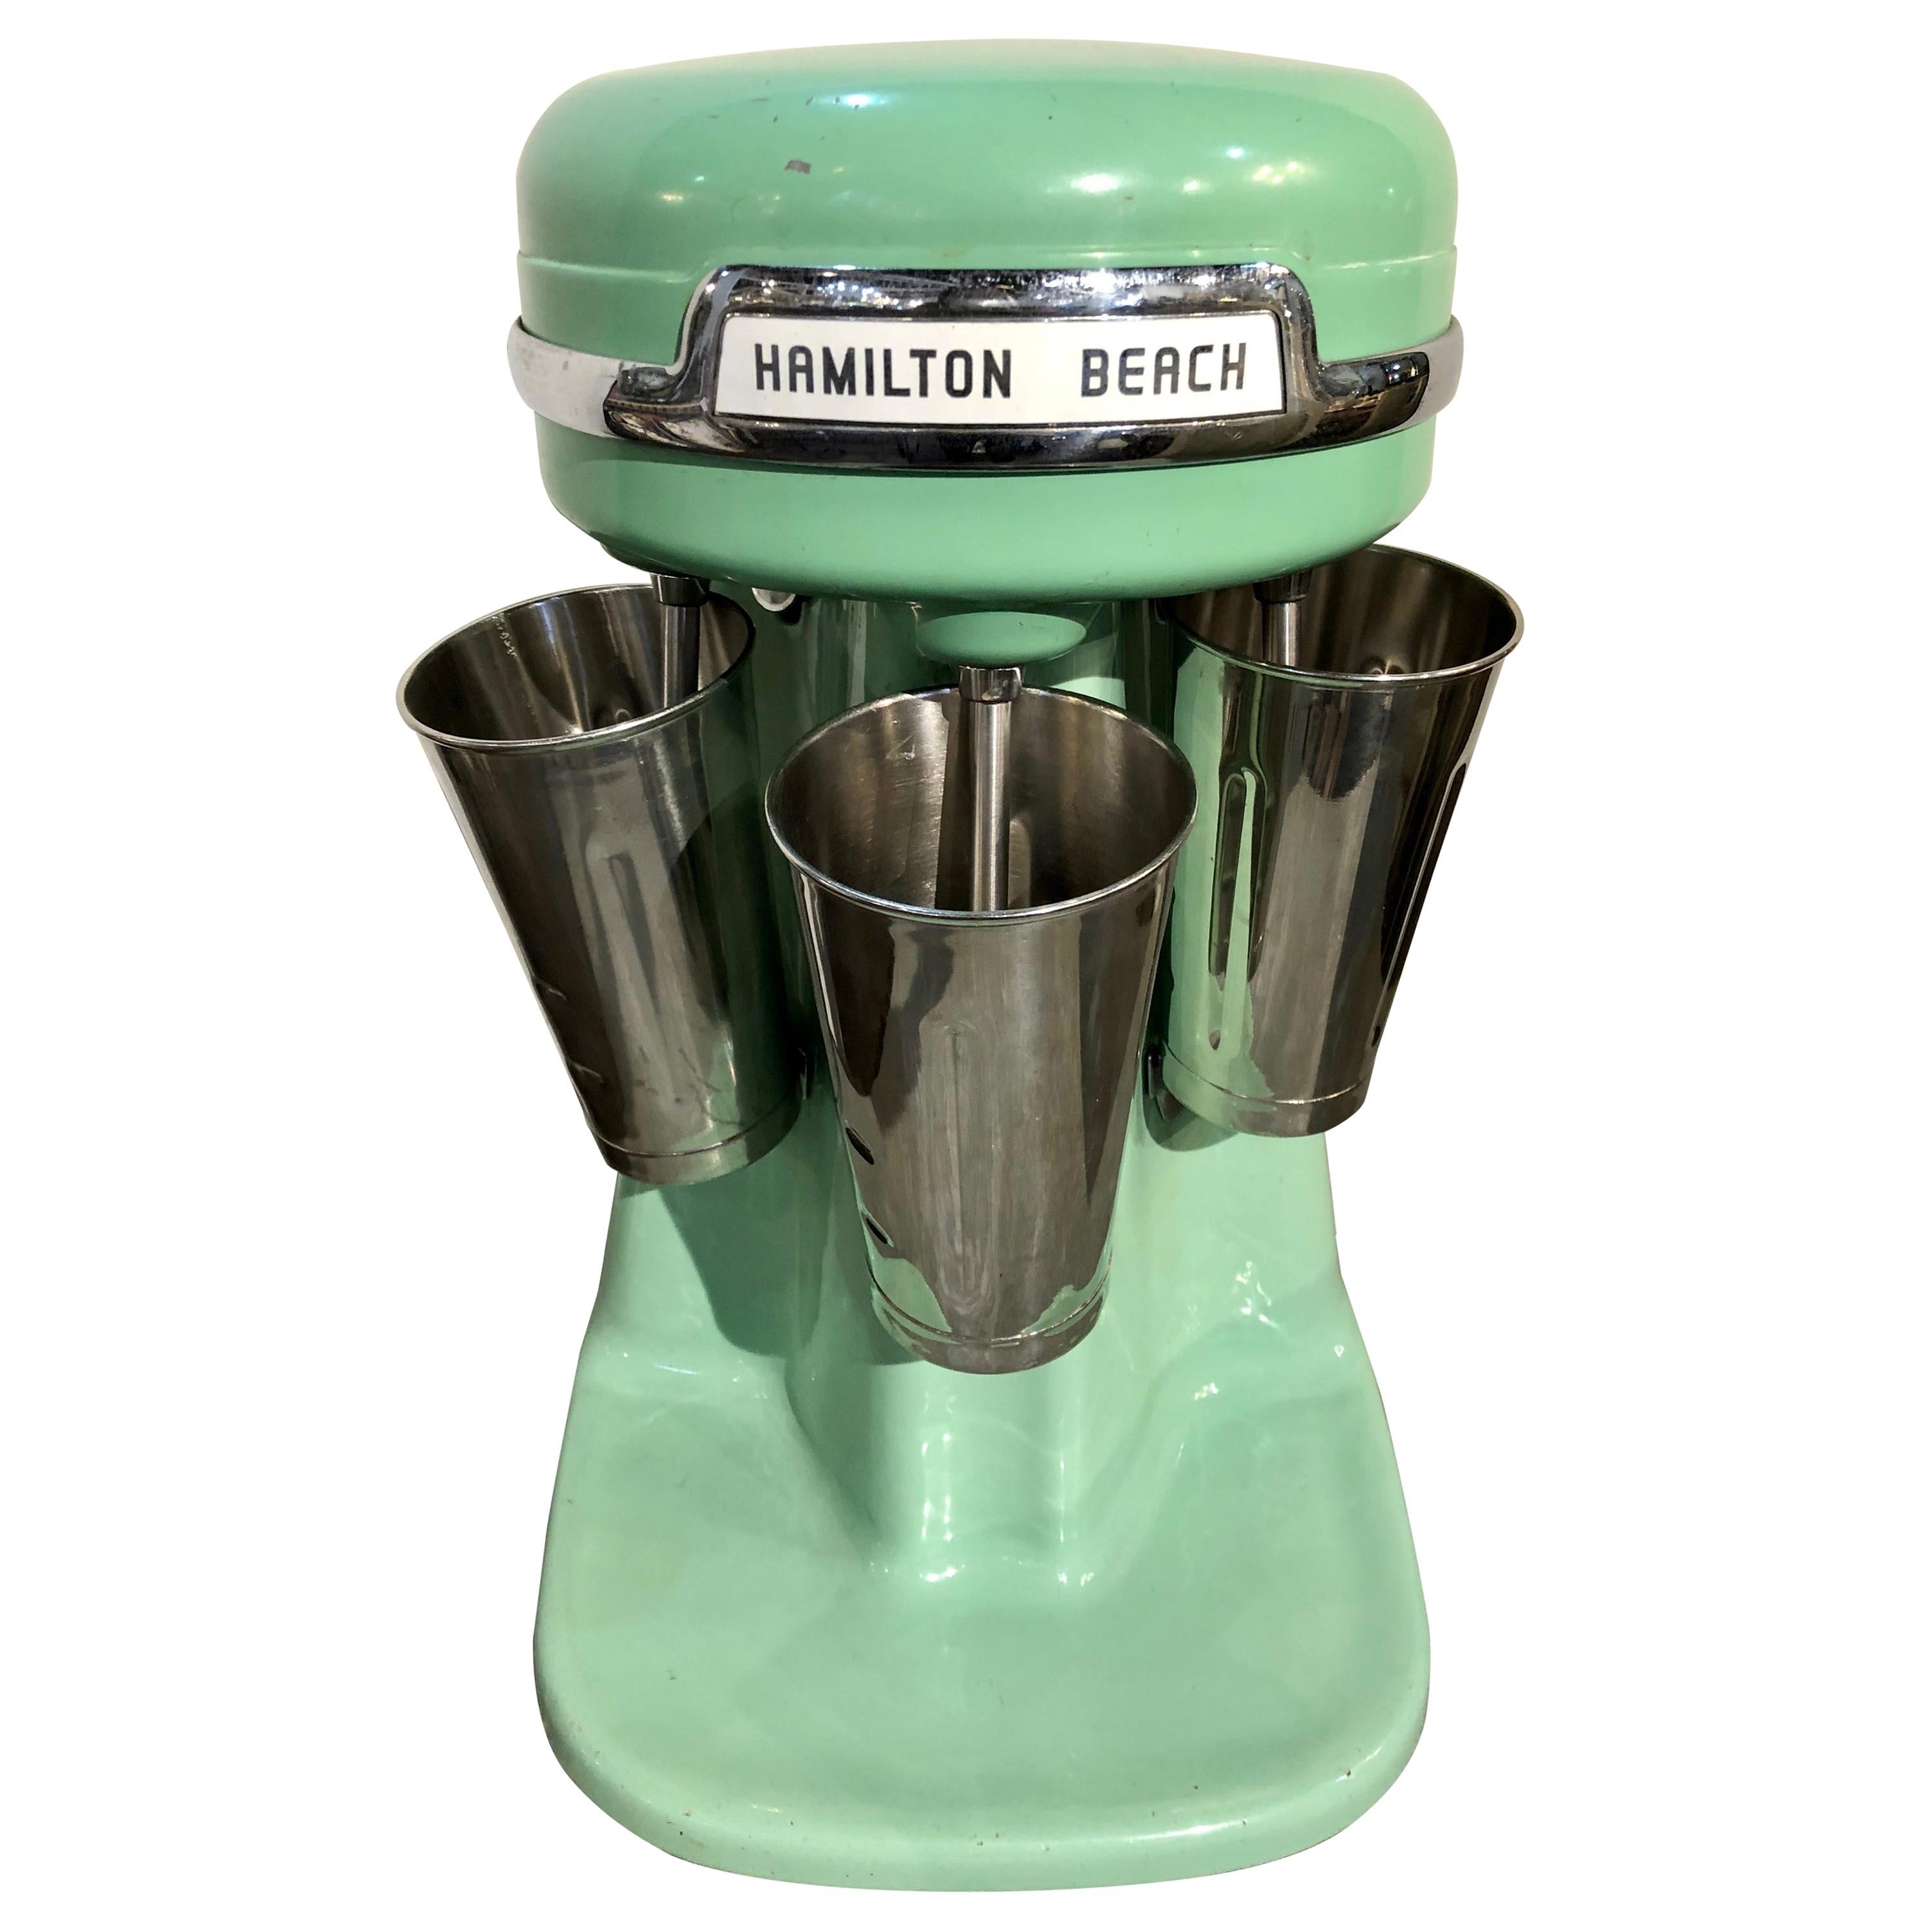 Vintage Milk Shake mixer Hamilton Beach - antiques - by owner -  collectibles sale - craigslist